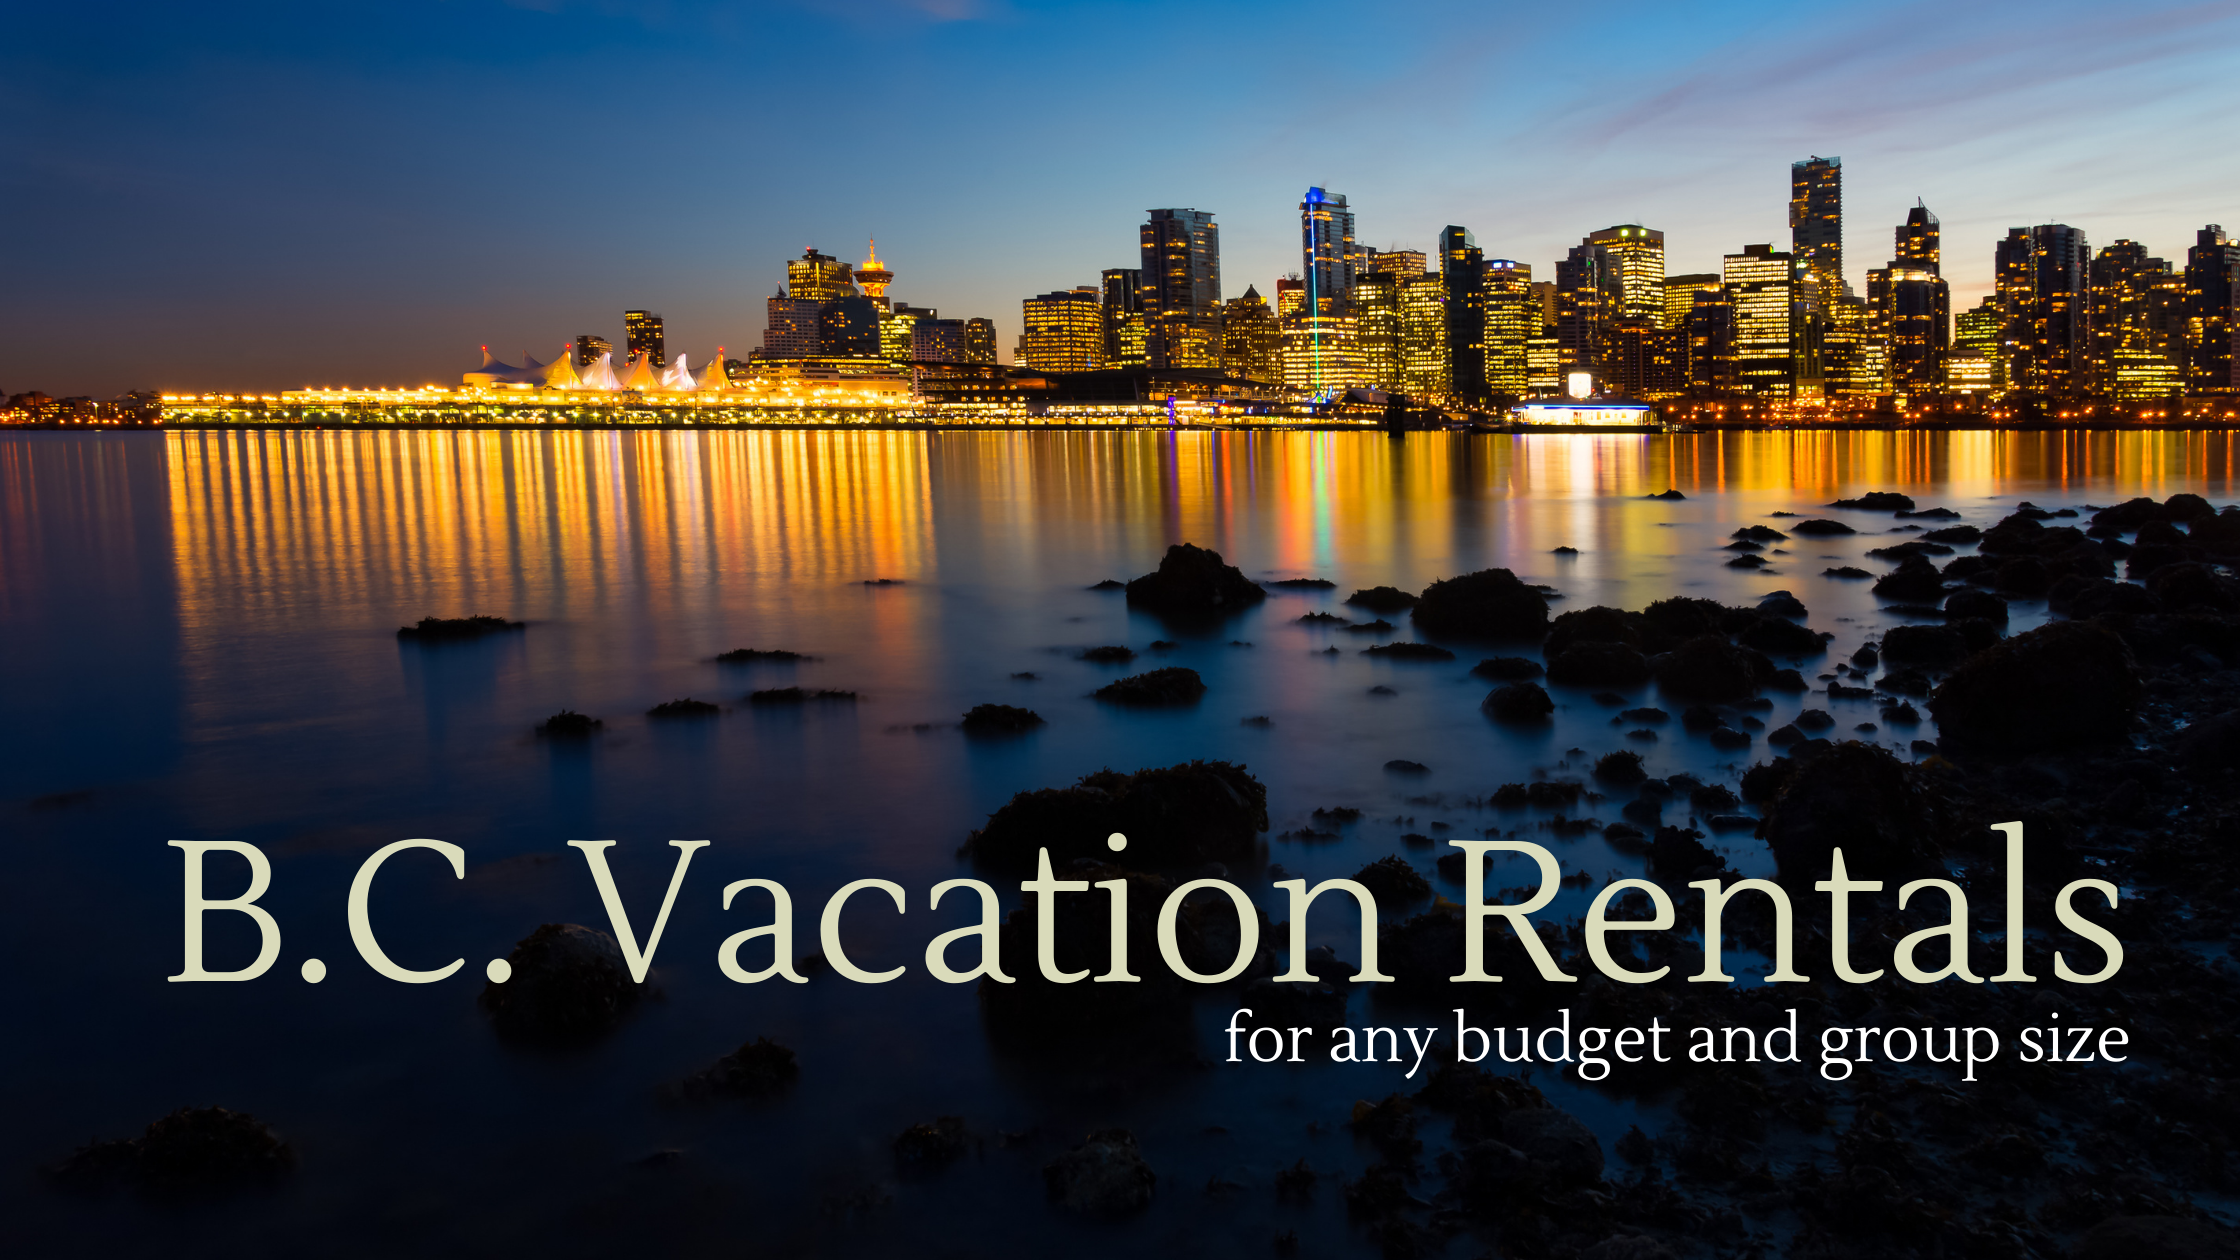 B.C. Vacation Rentals